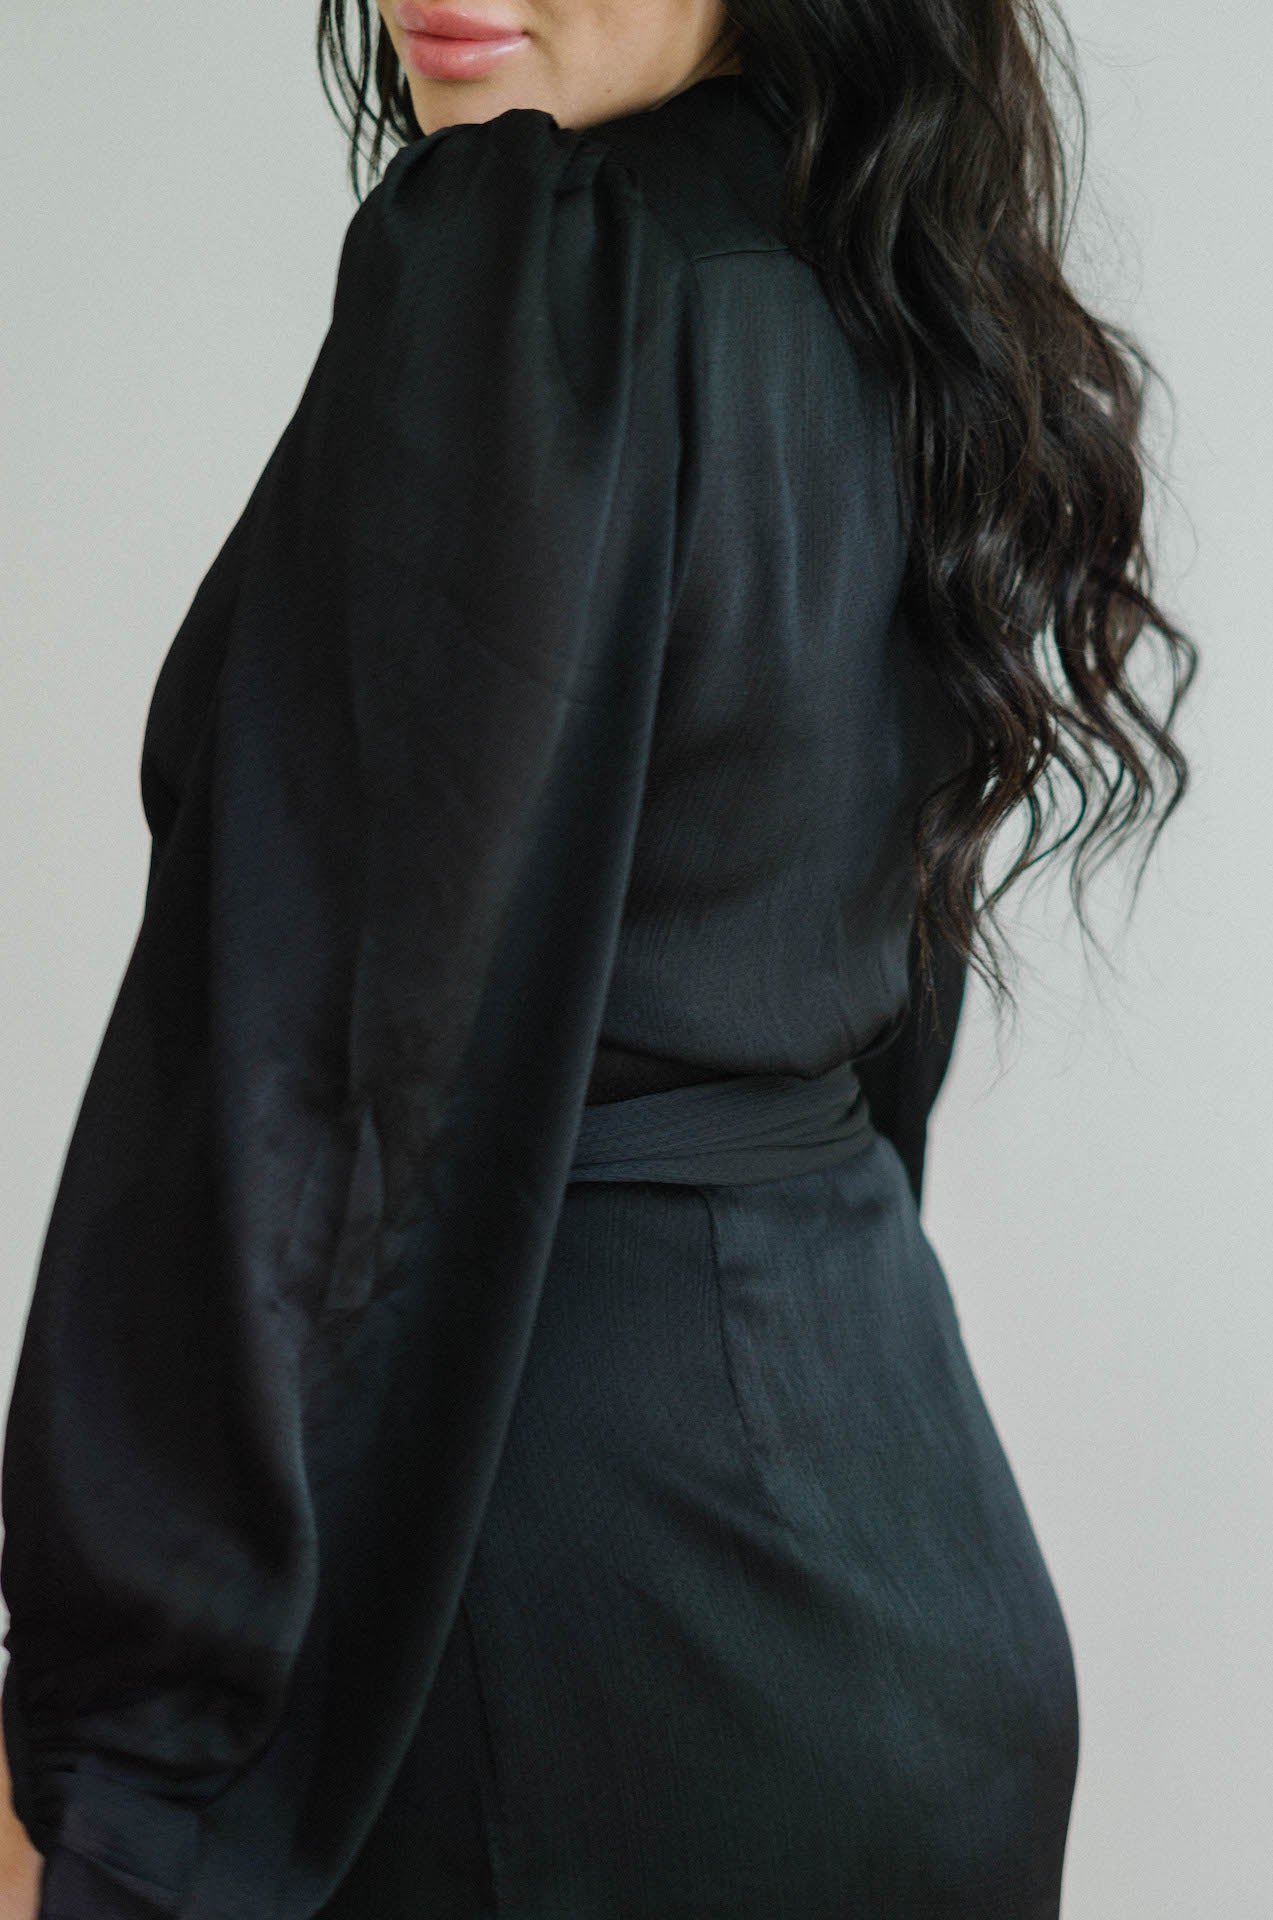 black wrap mini dress with long sleeves